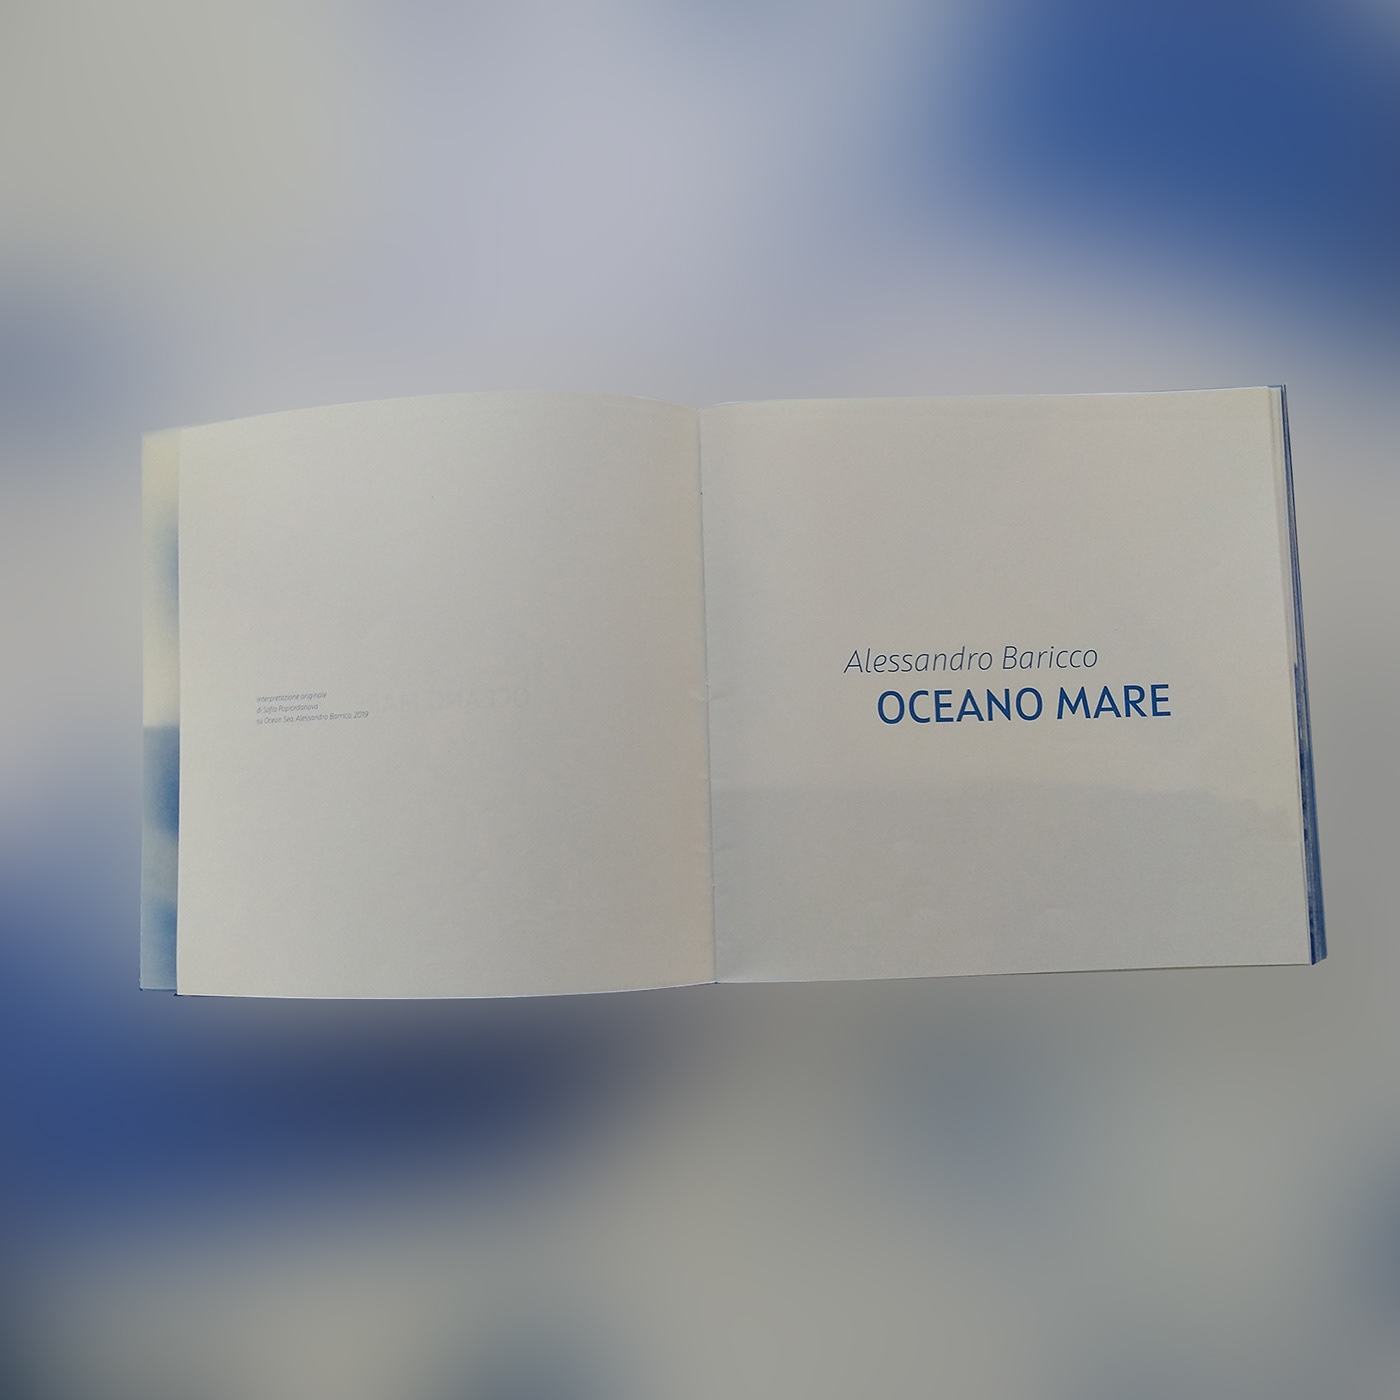 luxurius book art Ocean sea poetic Shadows artbook Luxury Book Oceano Mare